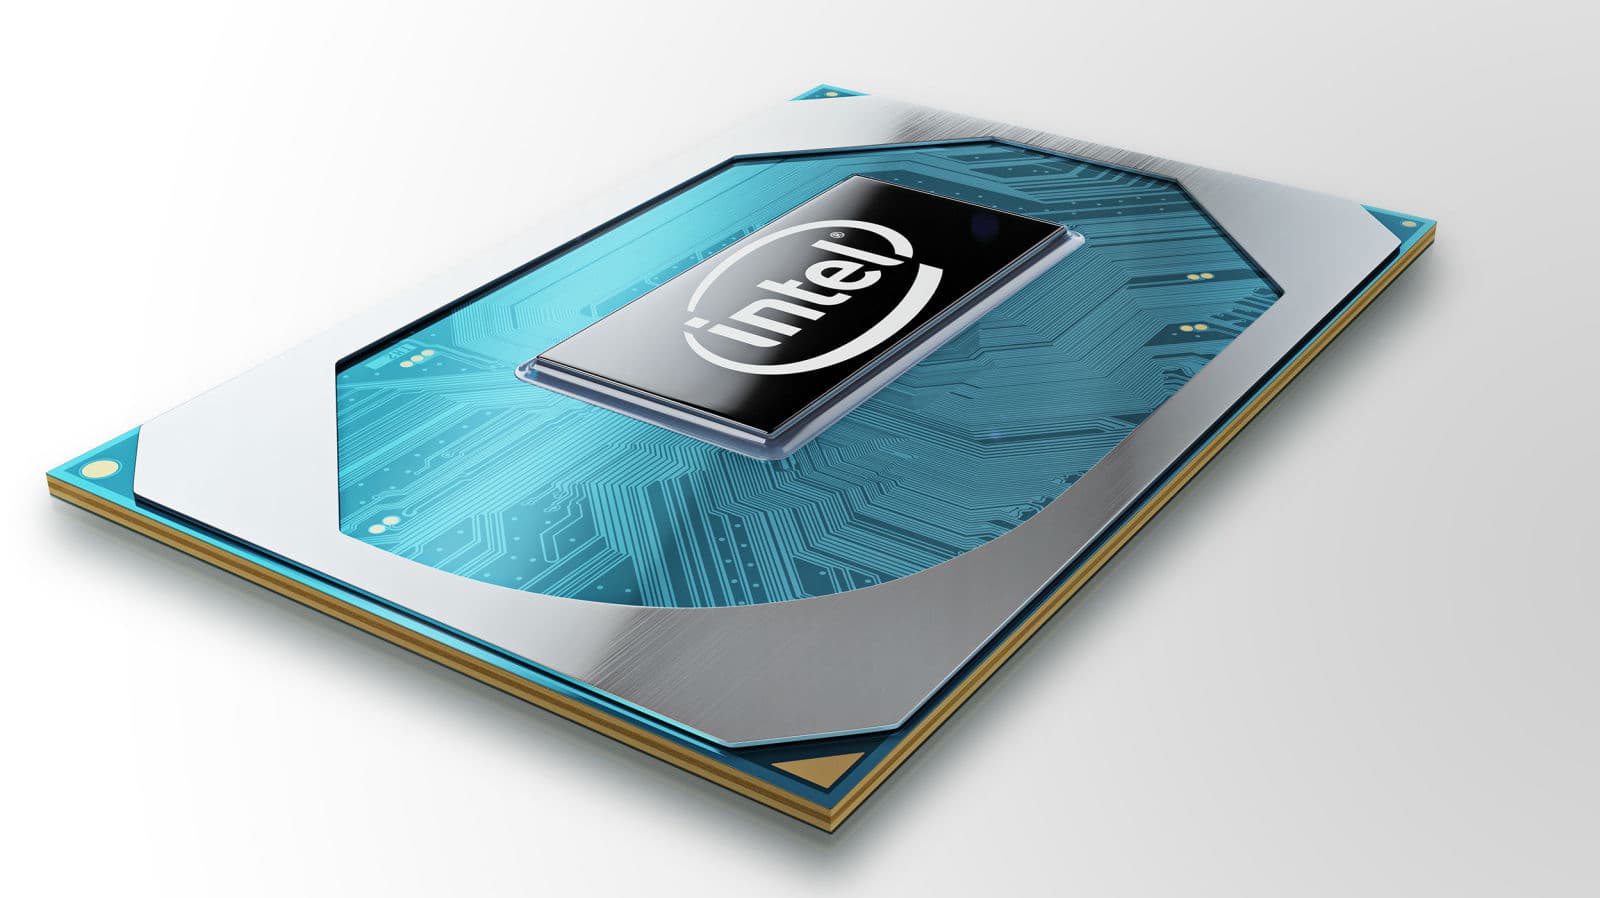 Chip Intel